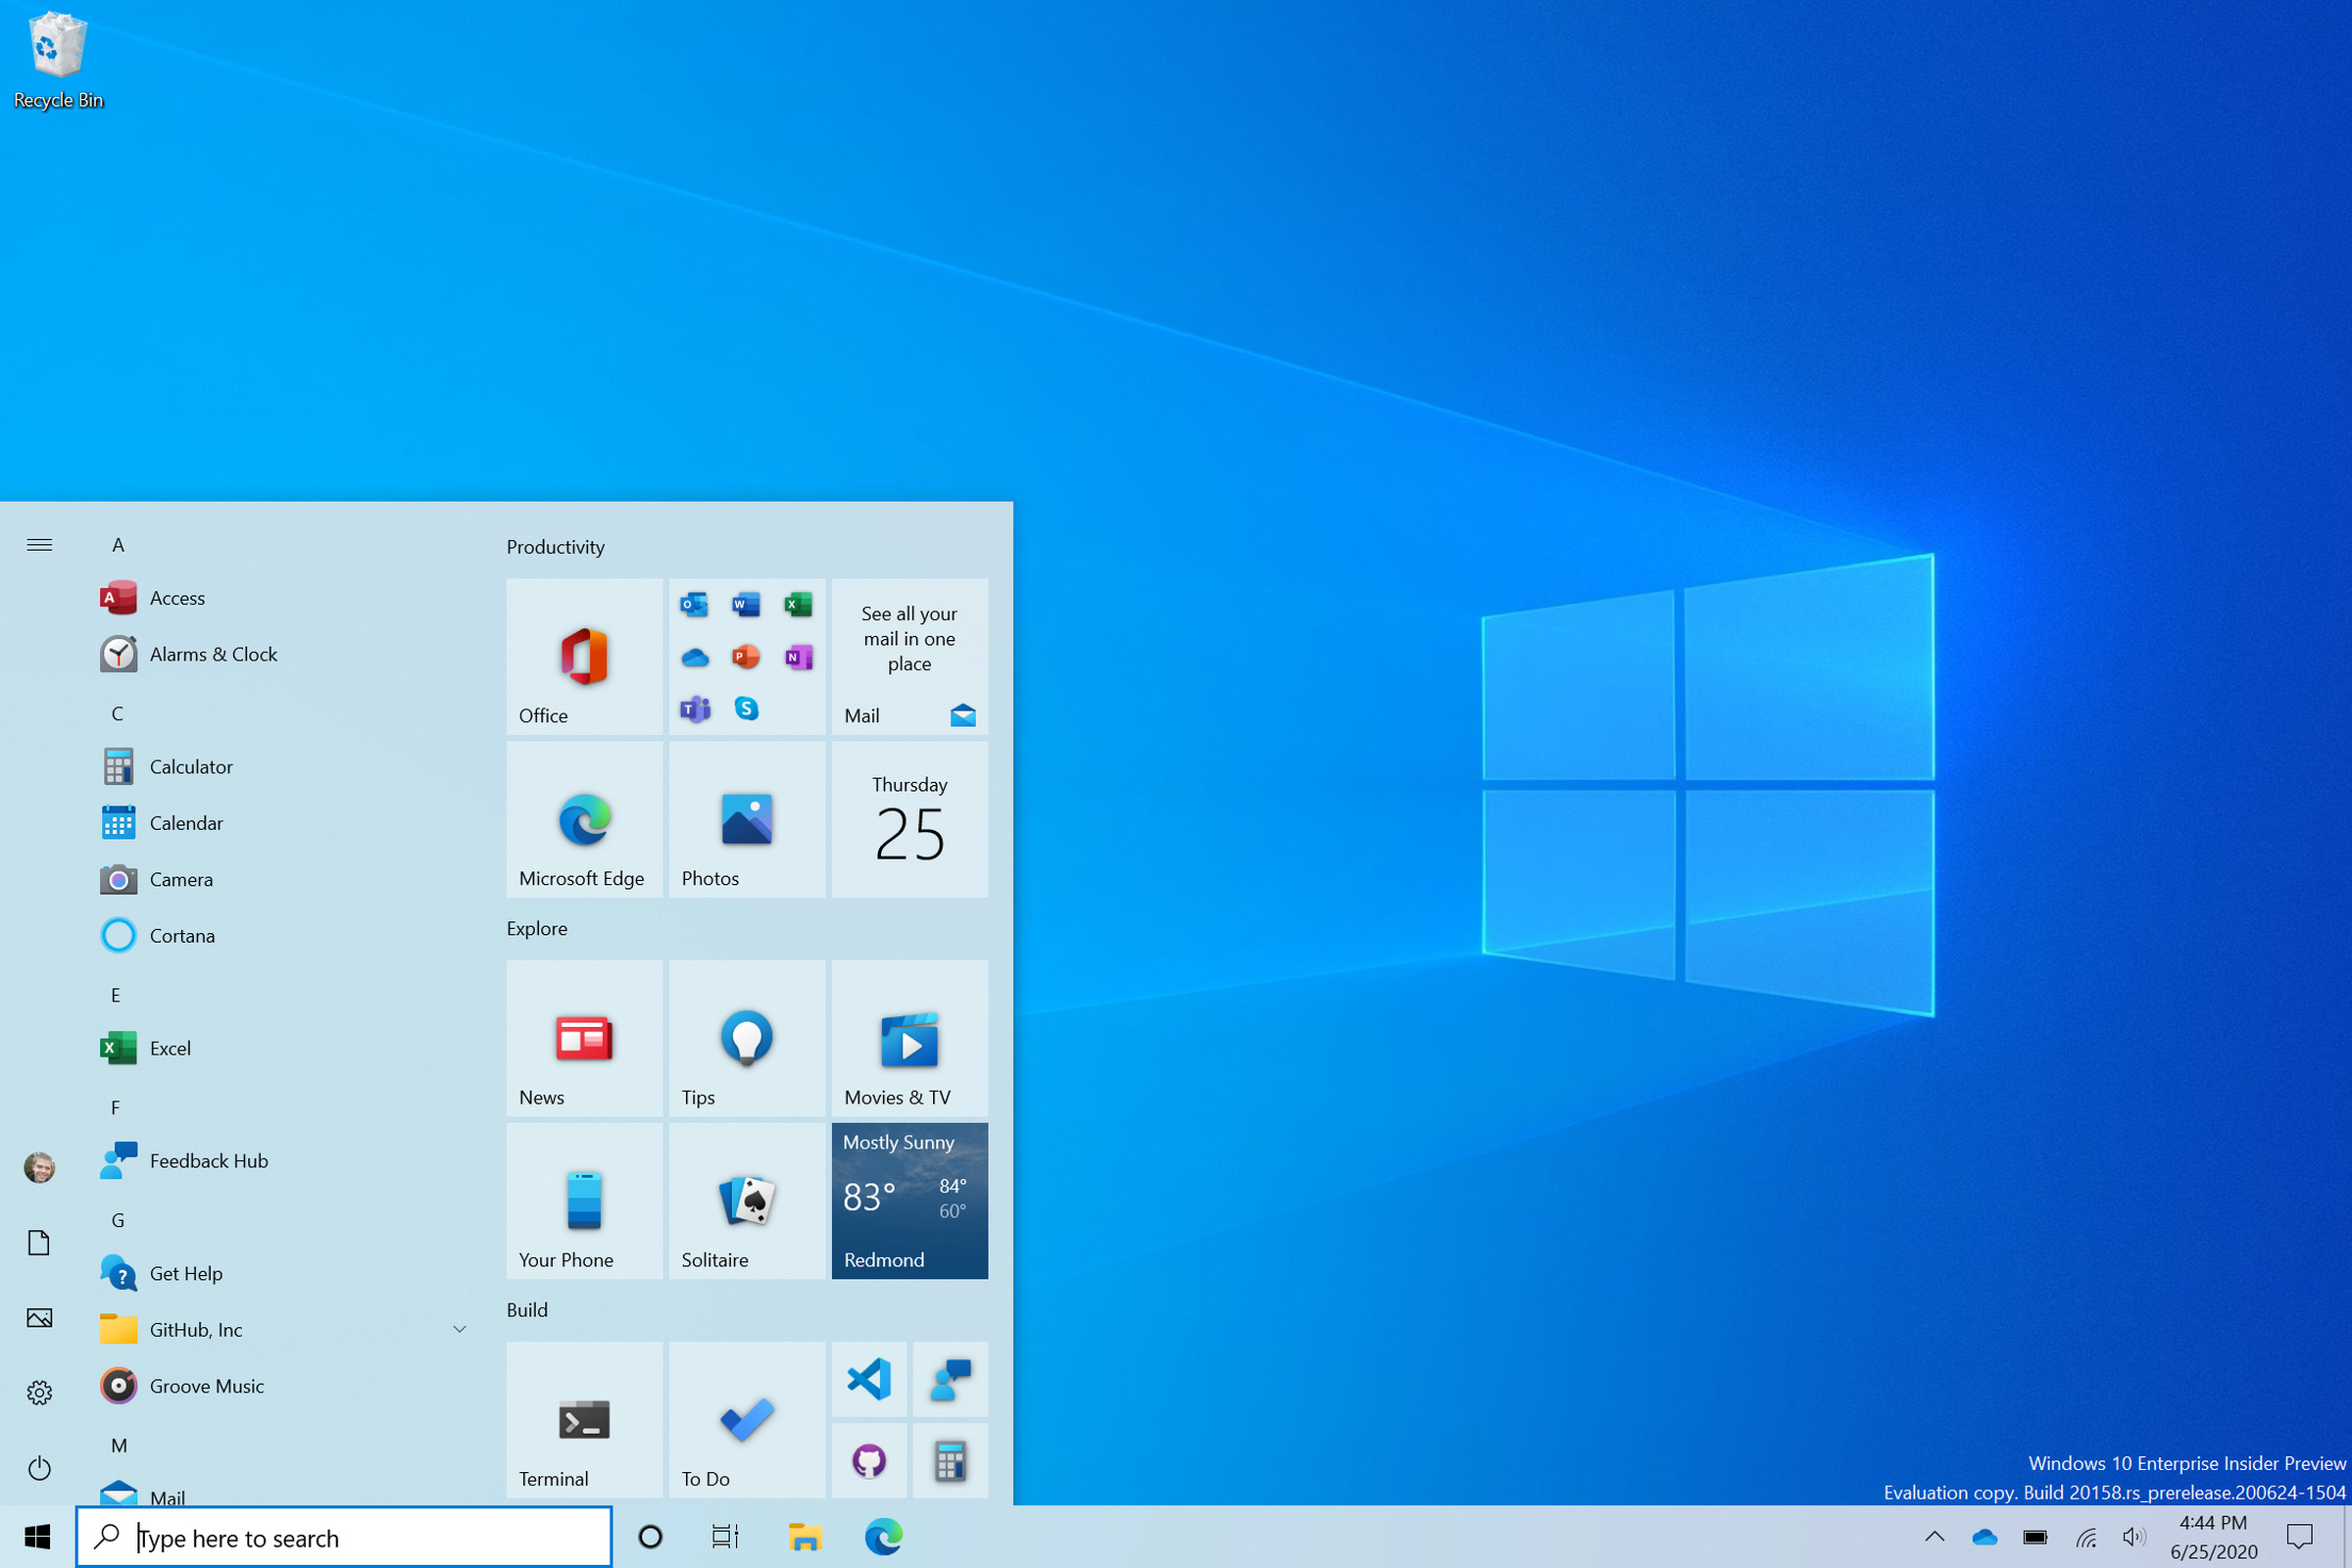 The updated Windows 10 Start menu from 2020.